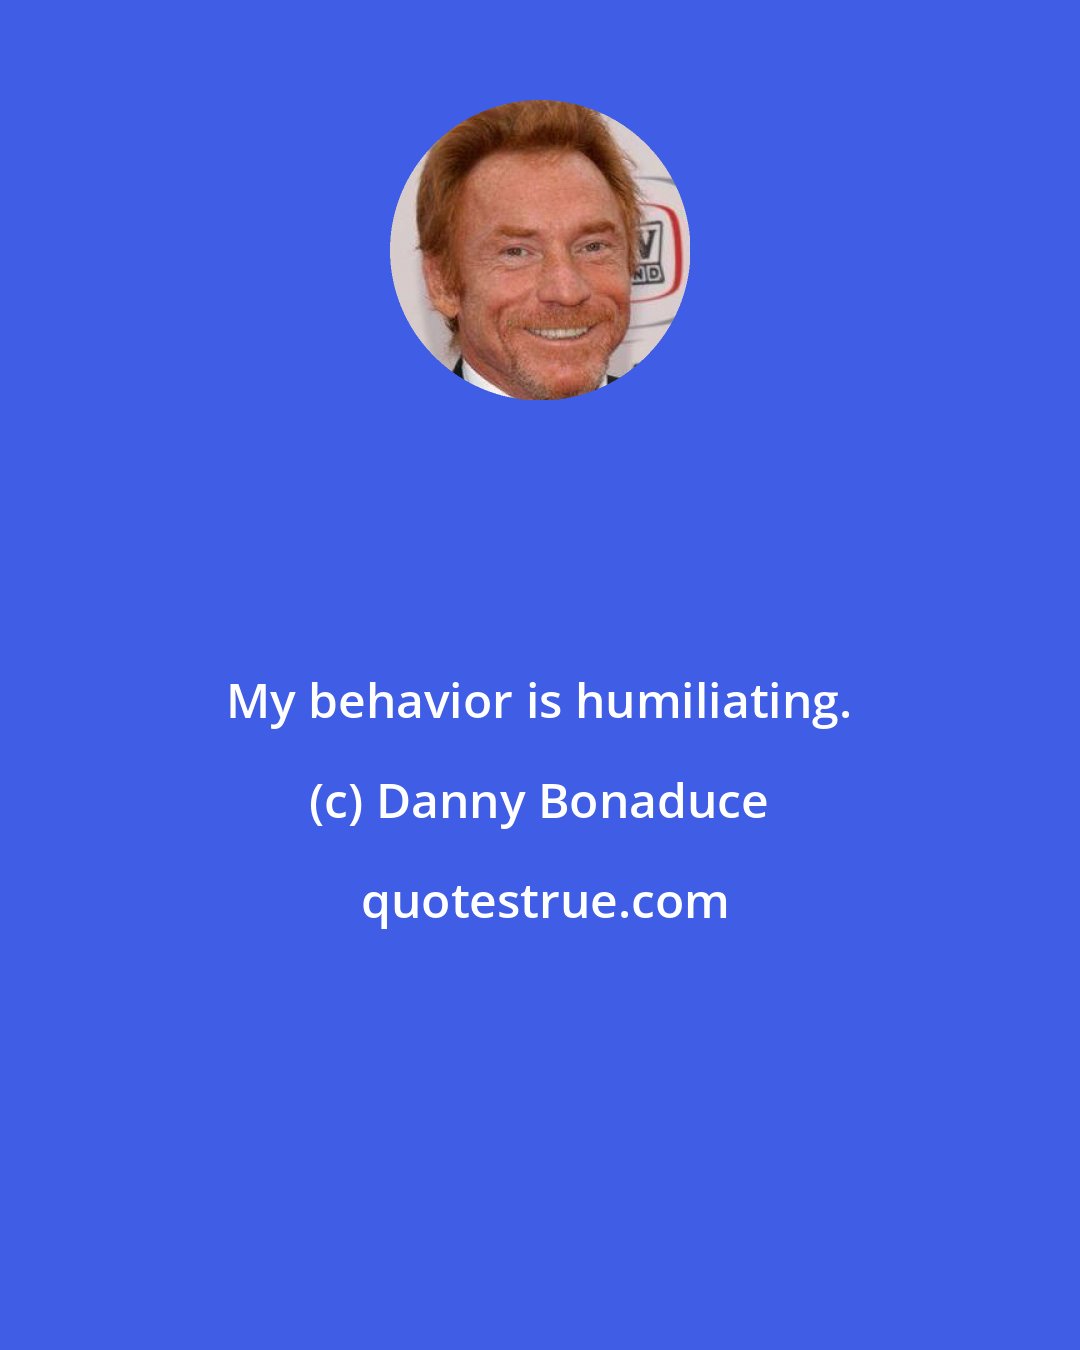 Danny Bonaduce: My behavior is humiliating.